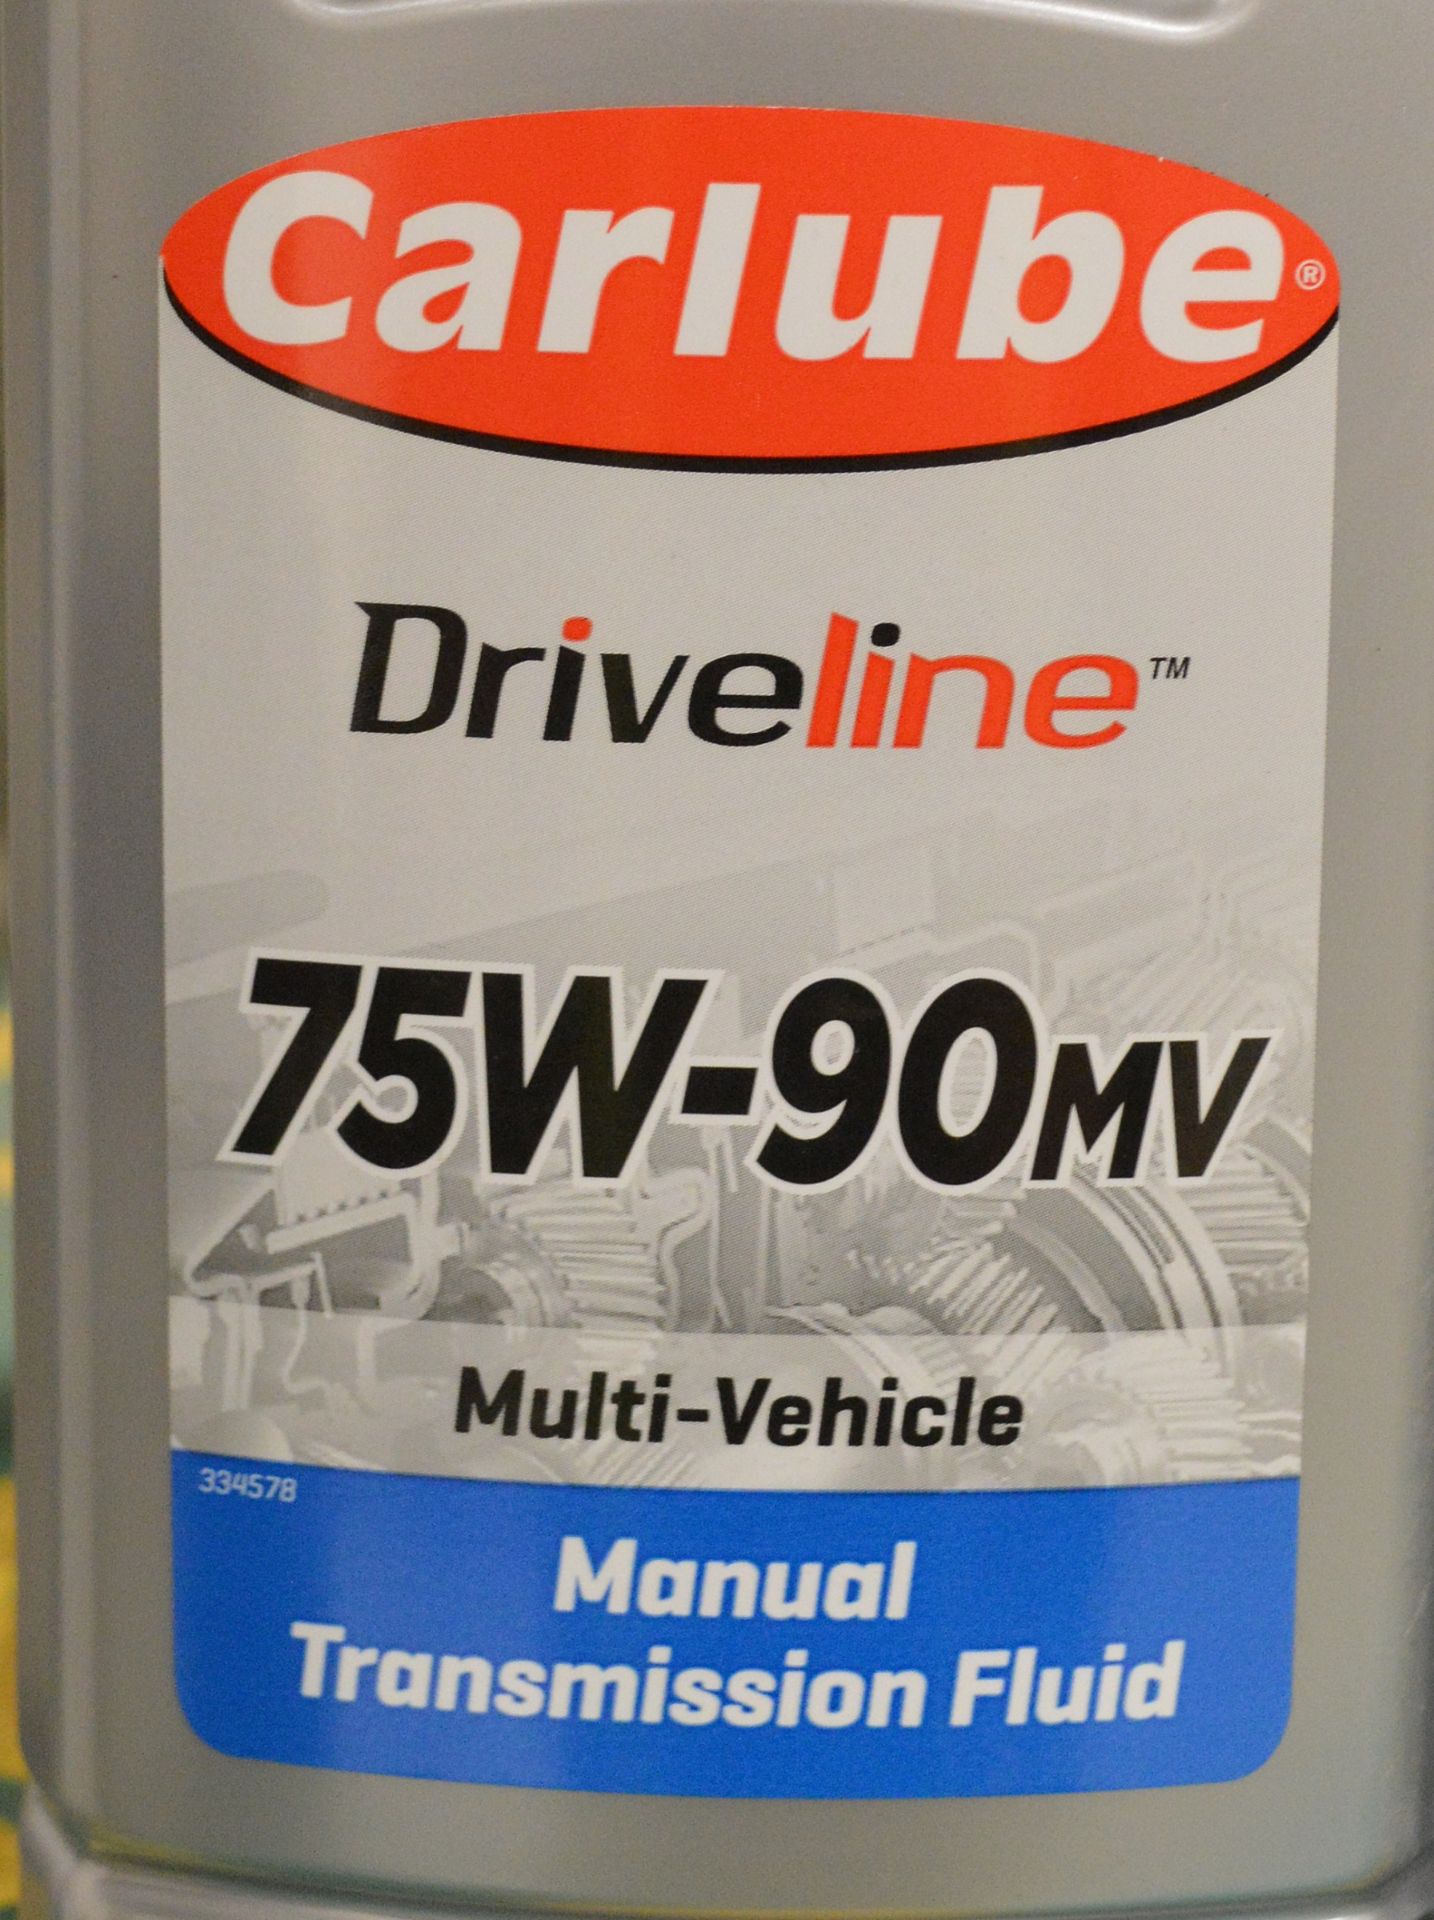 3x Carlube 75W-80MV & 3x 75W-90MV Manual transmission fluid - 1L - Image 2 of 3